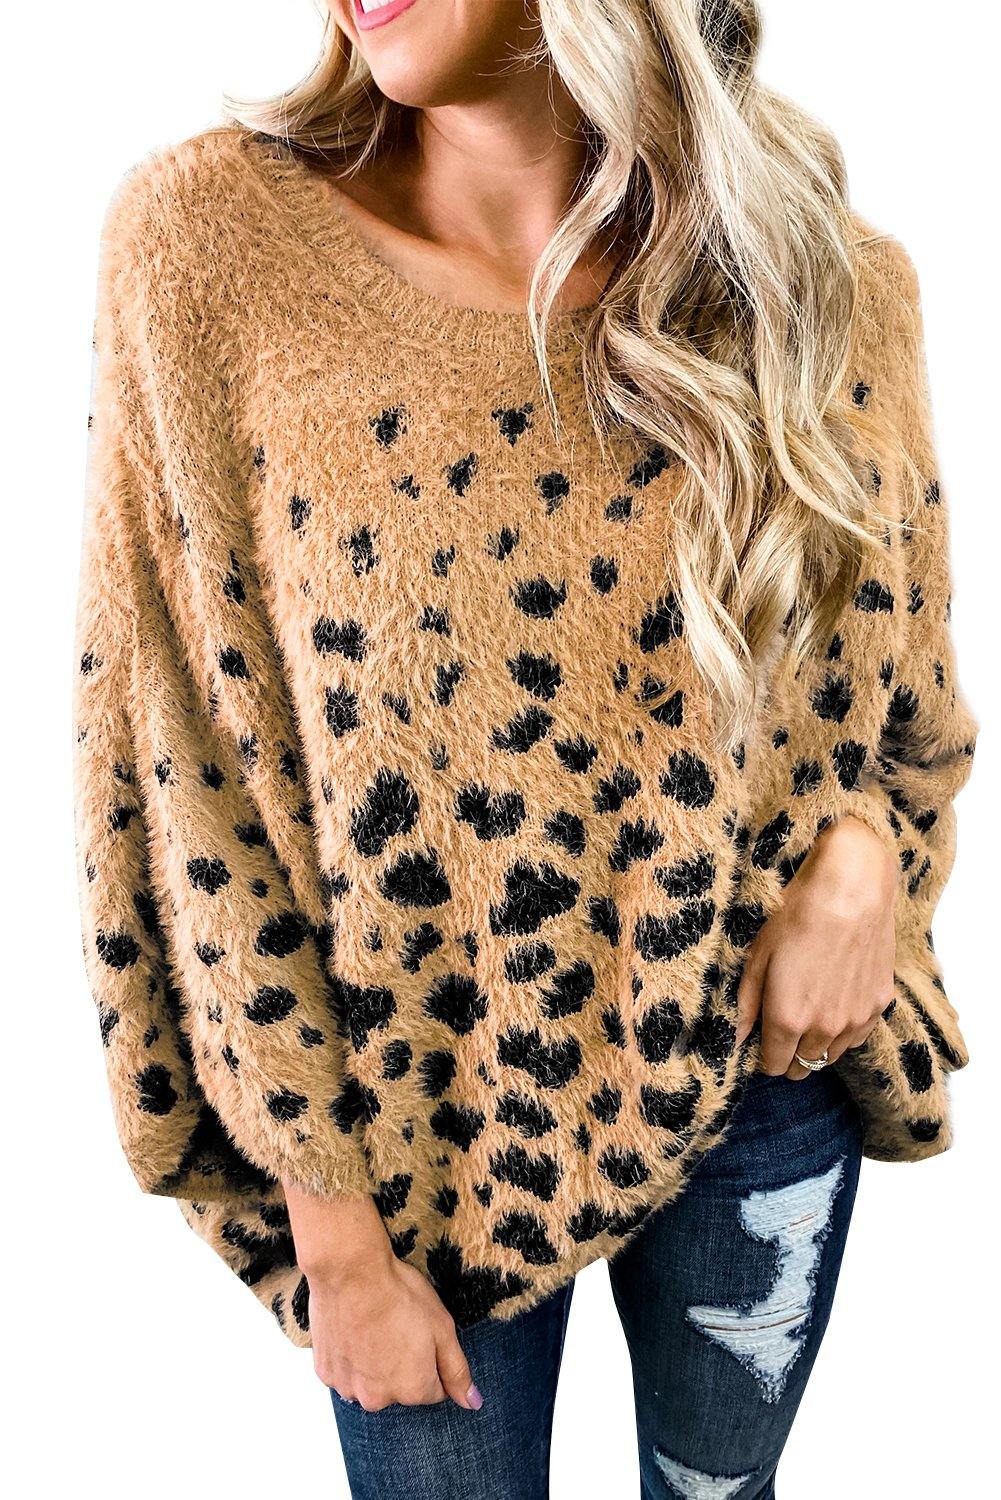 Print Drop Shoulder Loose Knitted Sweater - L & M Kee, LLC